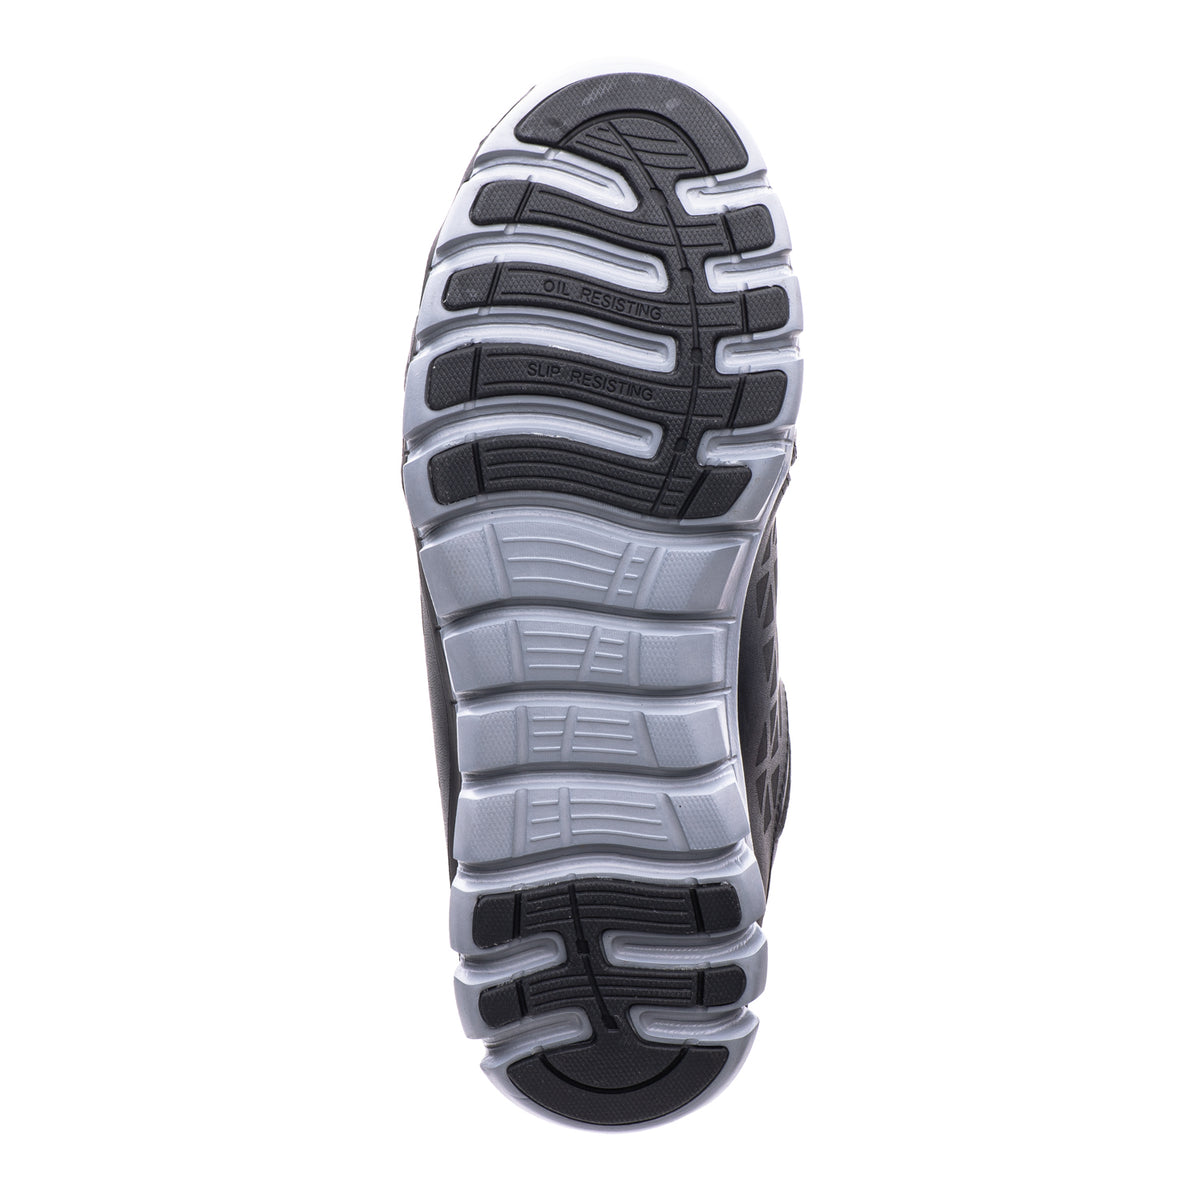 Sublite Hi-Top Athletic Men's composite toe leather work boots IB4142 ...